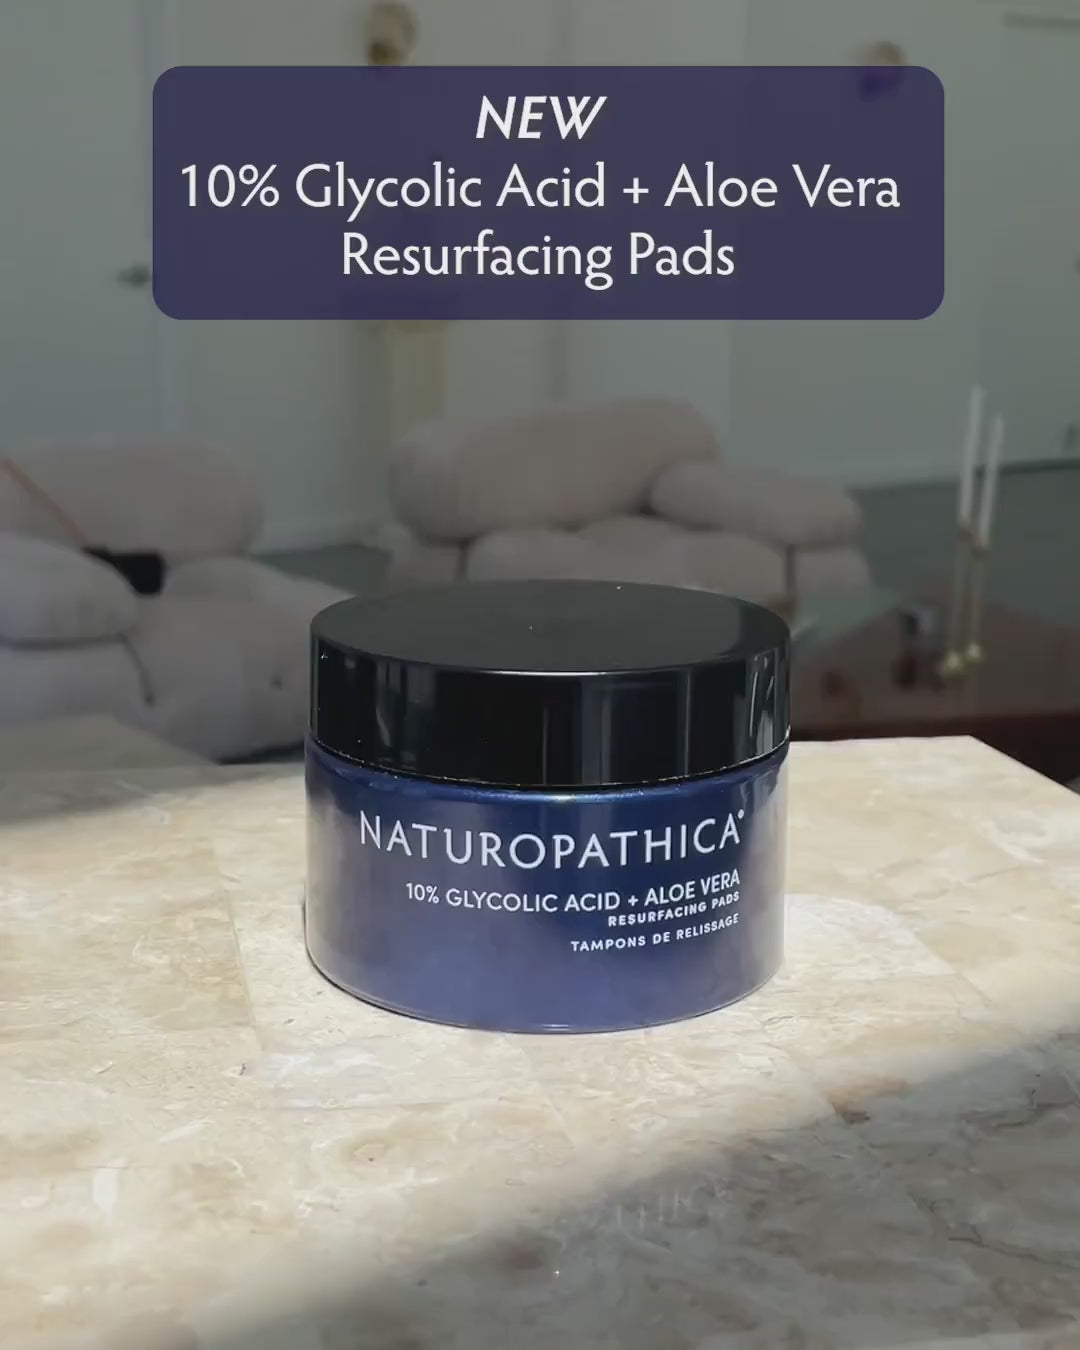 Naturopathica 10% Glycolic Acid + Aloe Vera Resurfacing Pads video